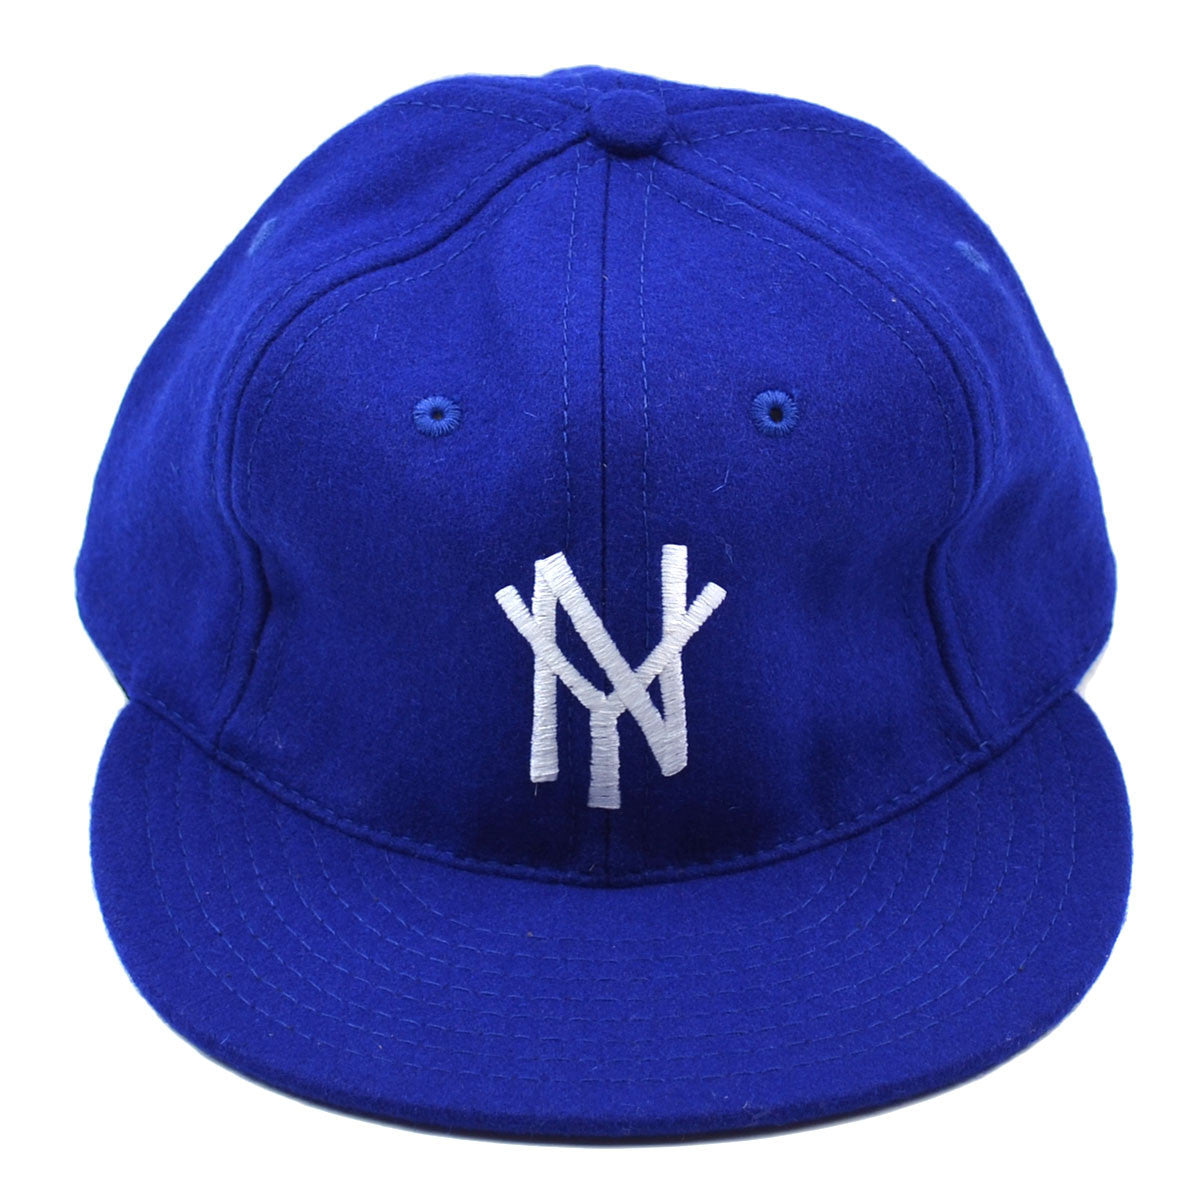 WOODLAND Men Baseball Cap with Brand Applique For Men (Blue, OS)